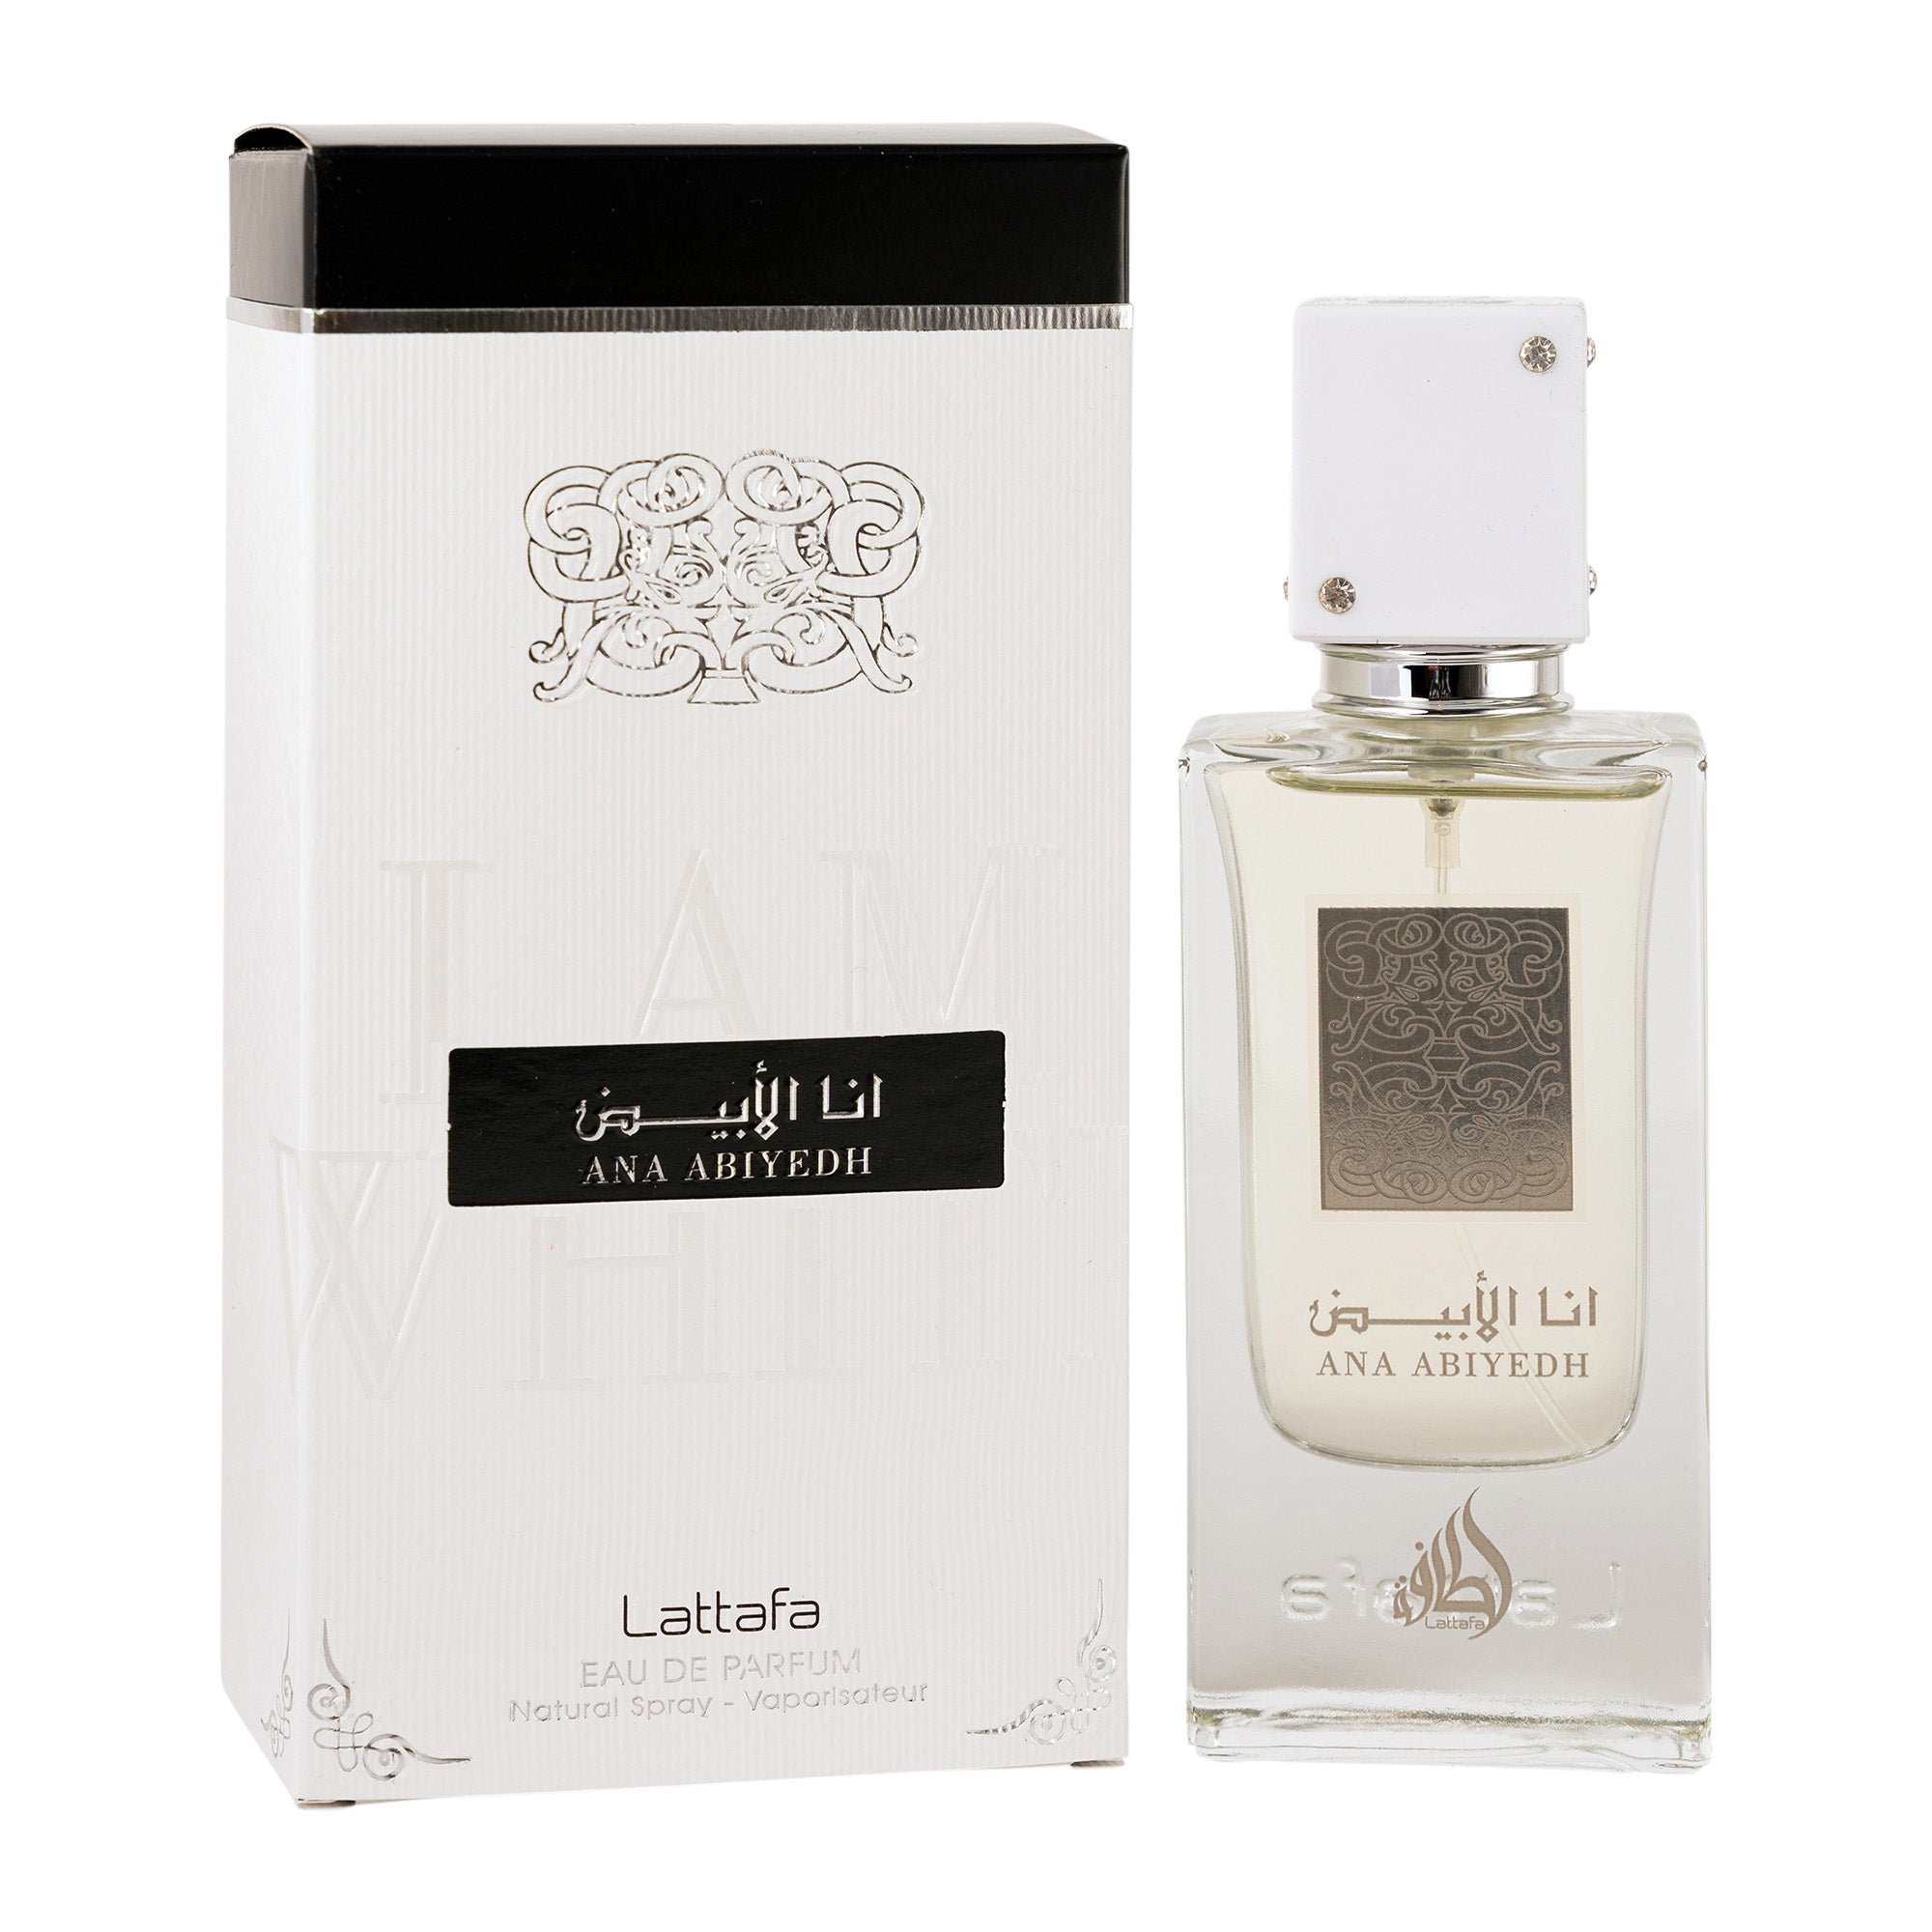 Lattafa Ana Abiyedh Eau de Parfum 60ml